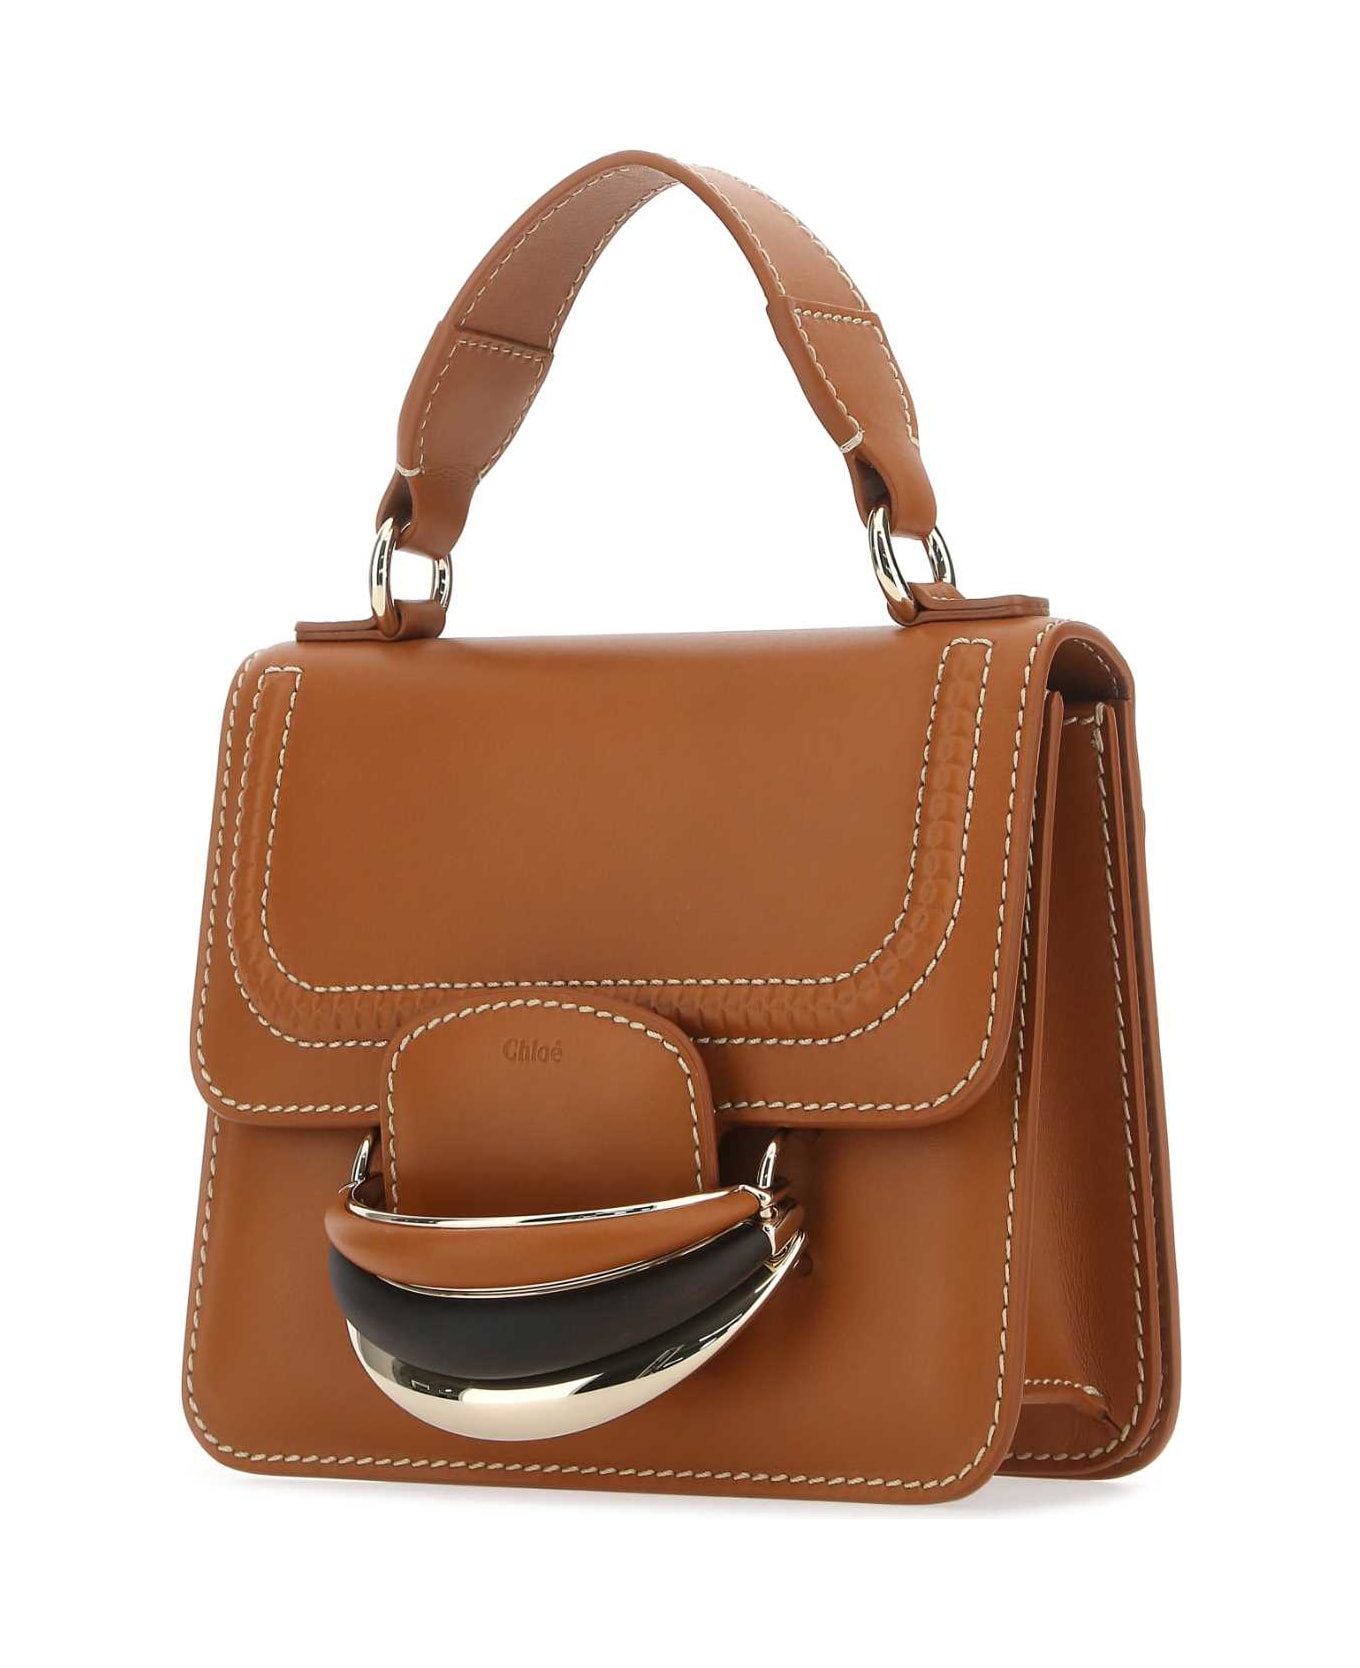 Chloé Caramel Leather Small Kattie Handbag - 247